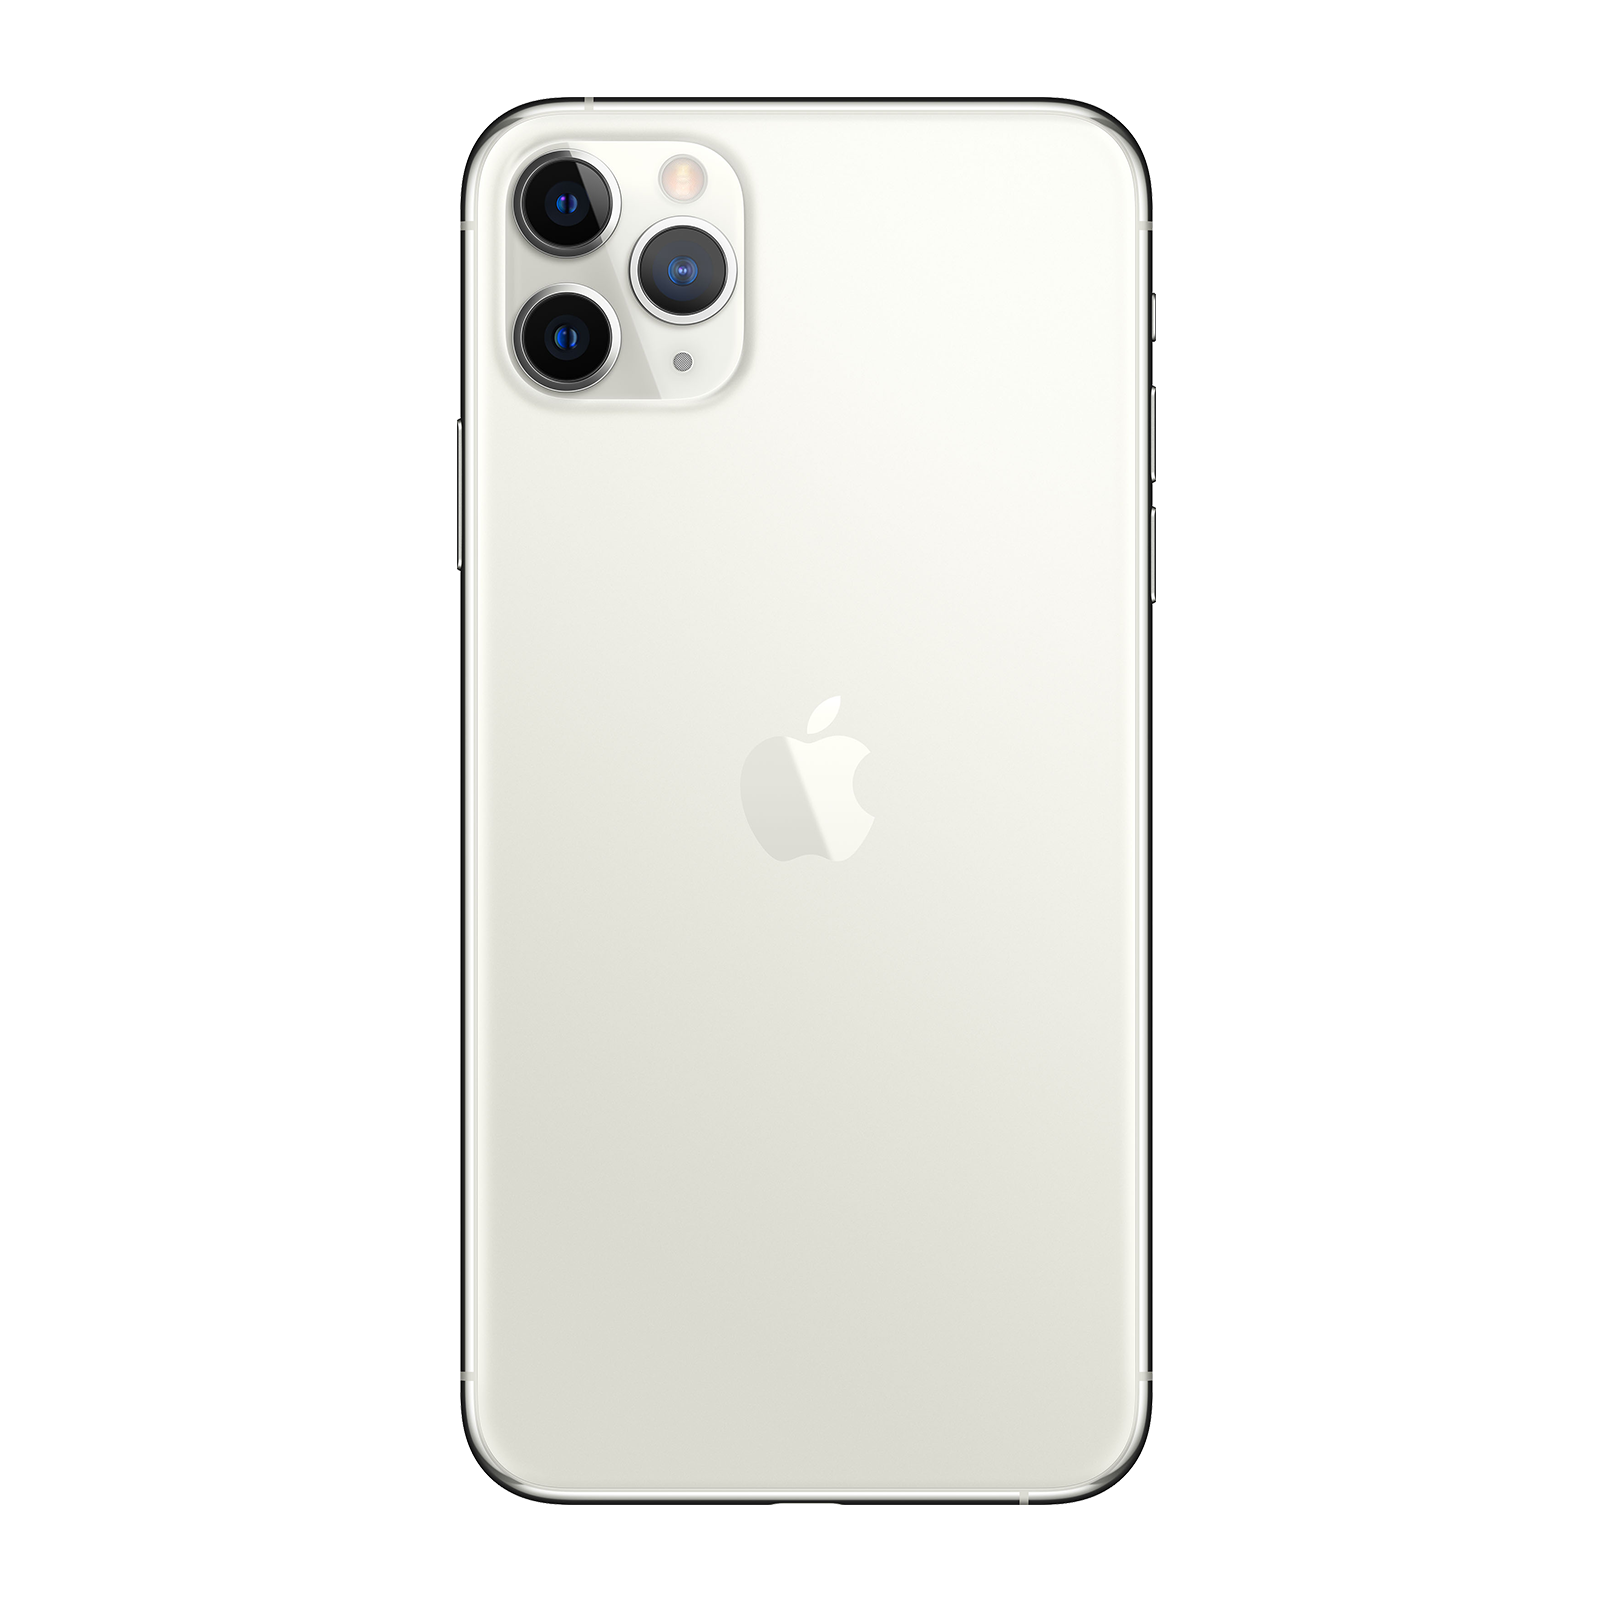 Apple iPhone 11 Pro Max 512GB Silver Pristine - Unlocked